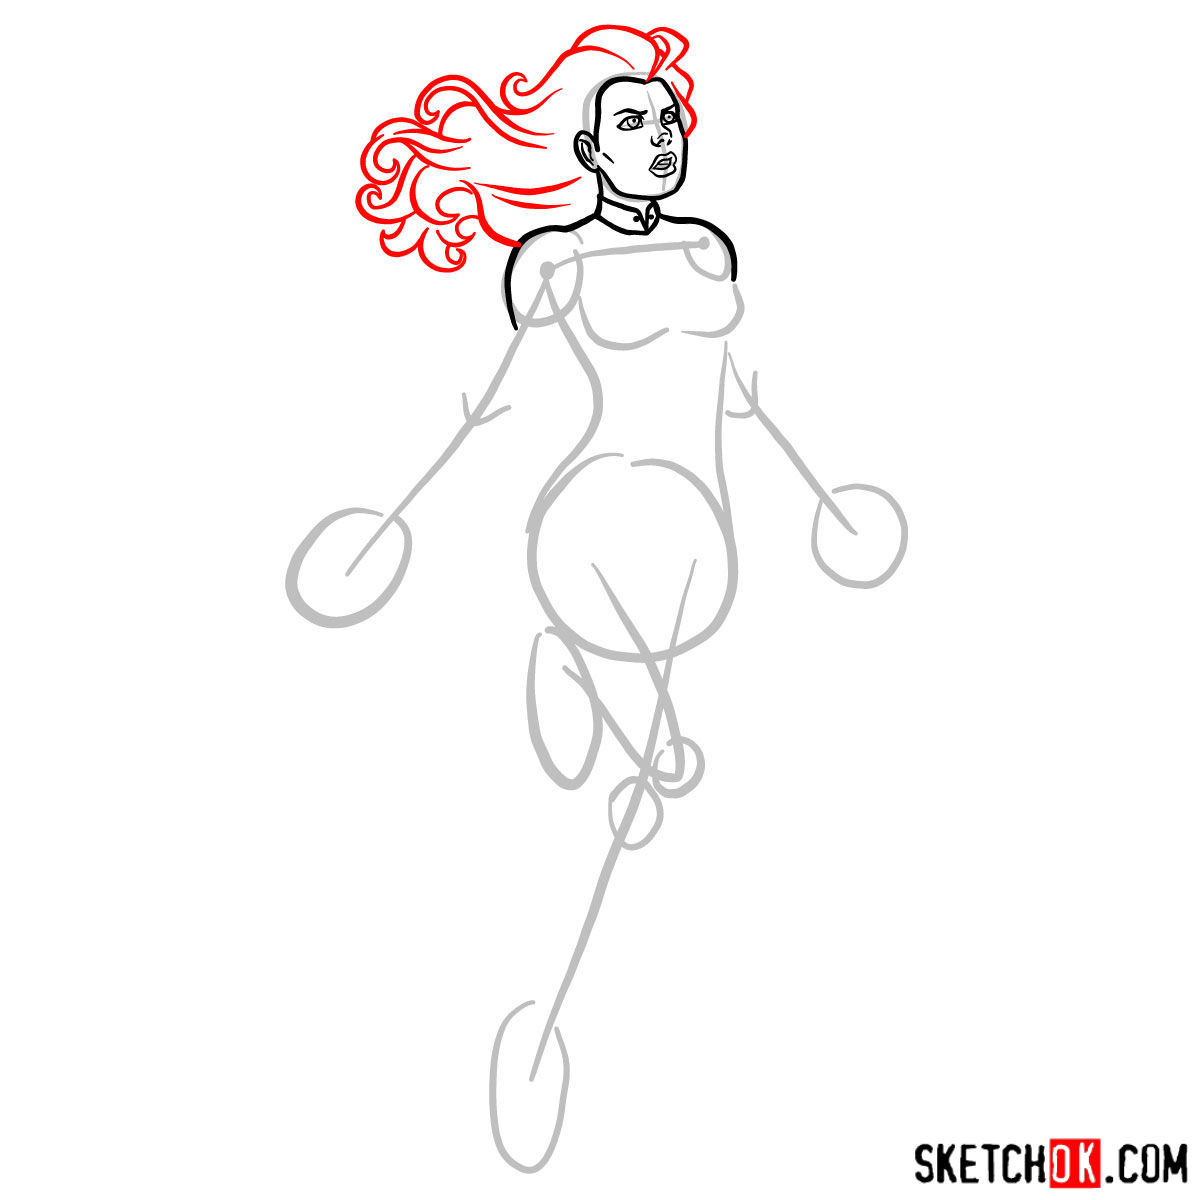 How to draw Captain Marvel (Carol Danvers) - step 05